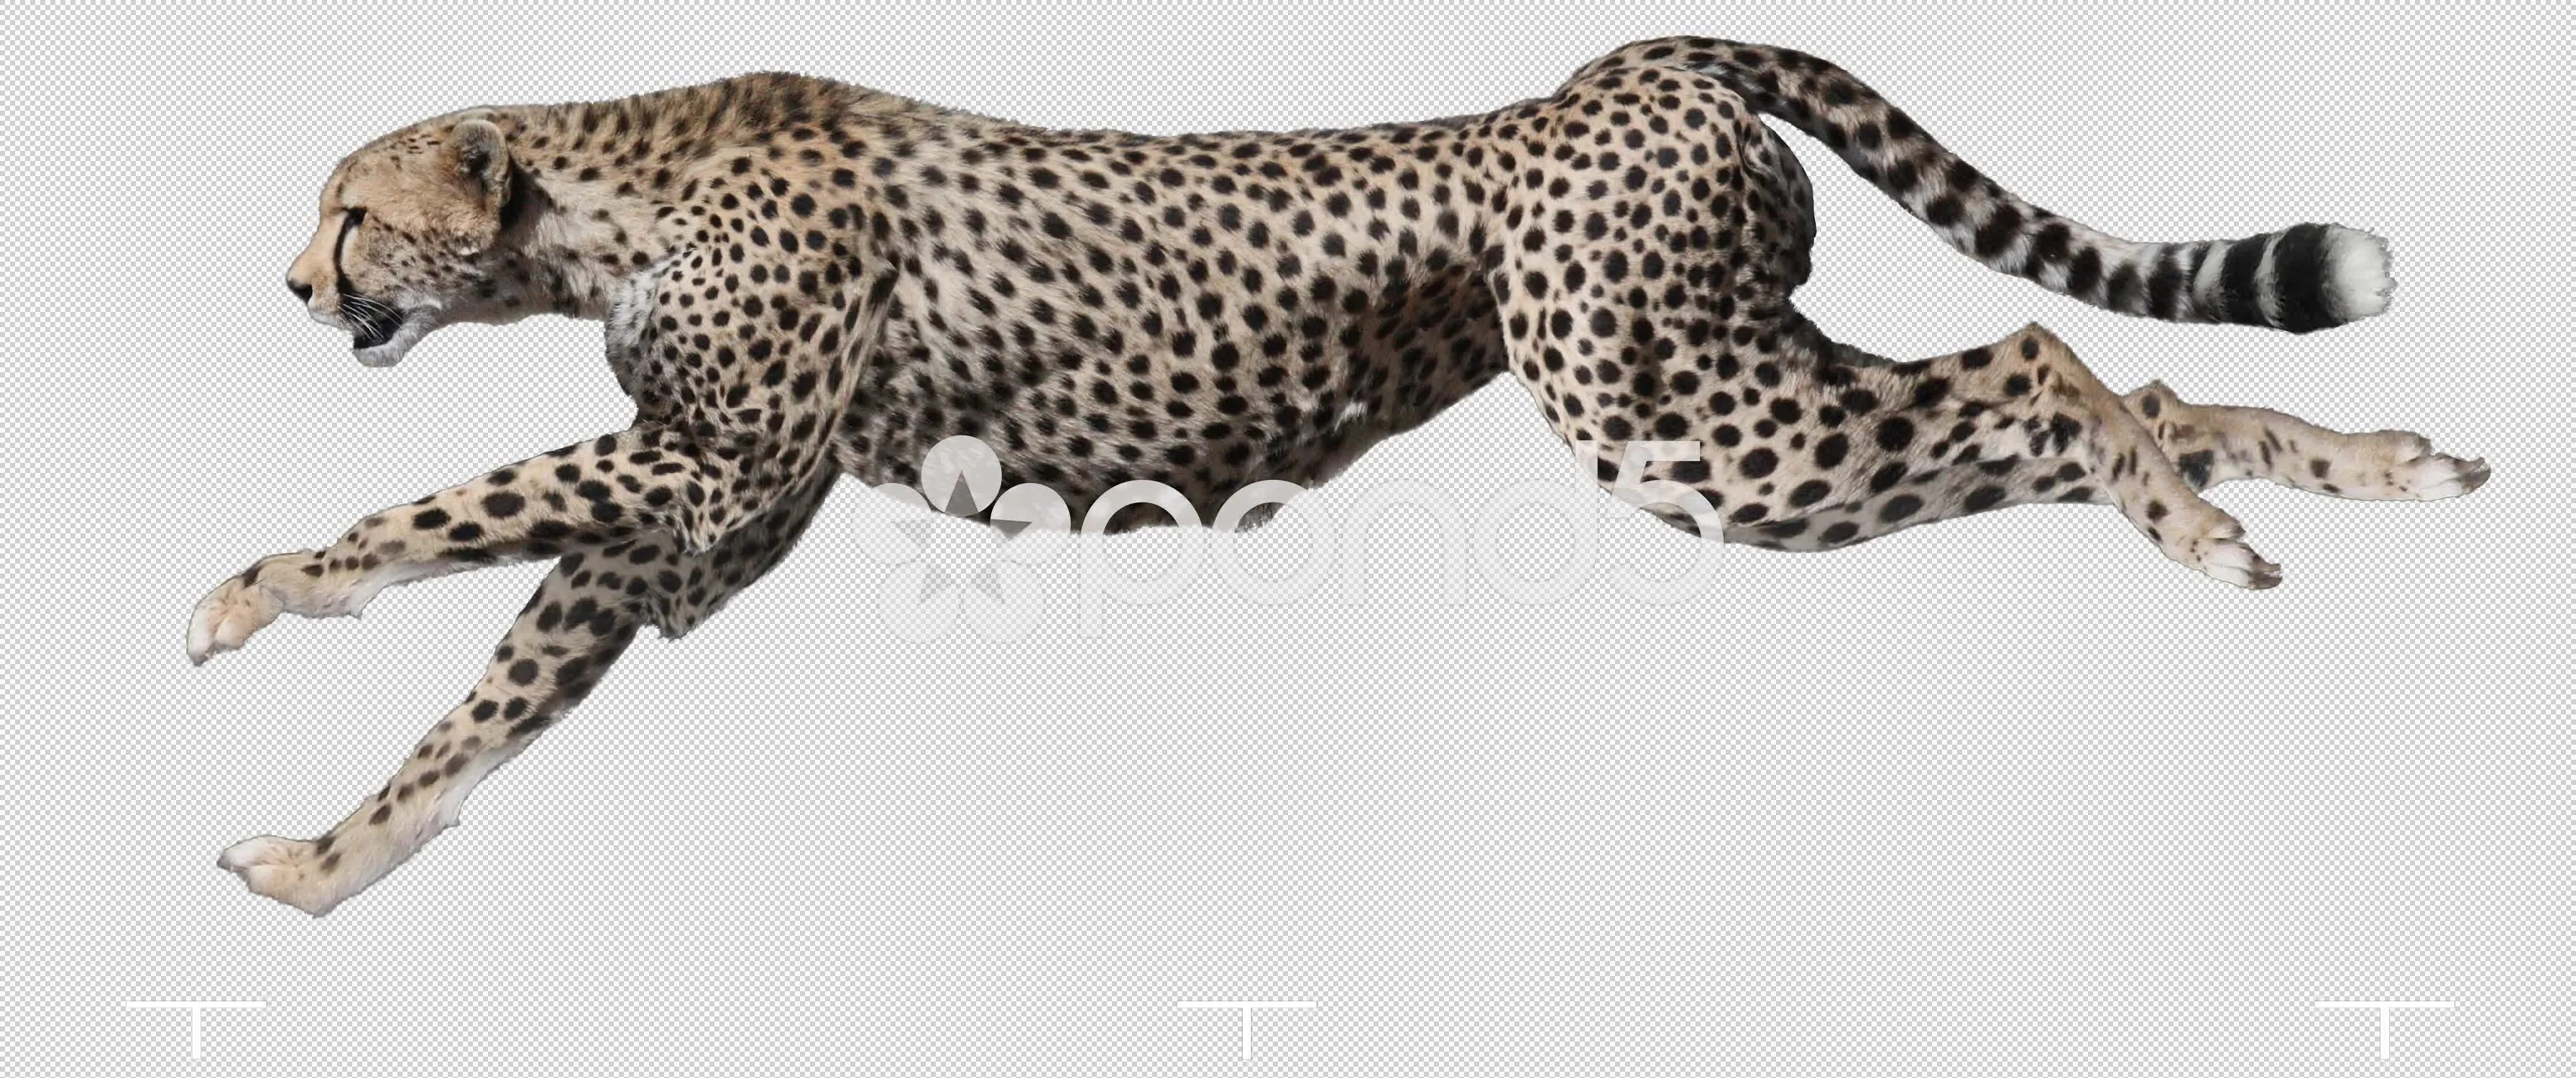 Jaguar Running Animal Stock Footage ~ Royalty Free Stock Videos | Pond5